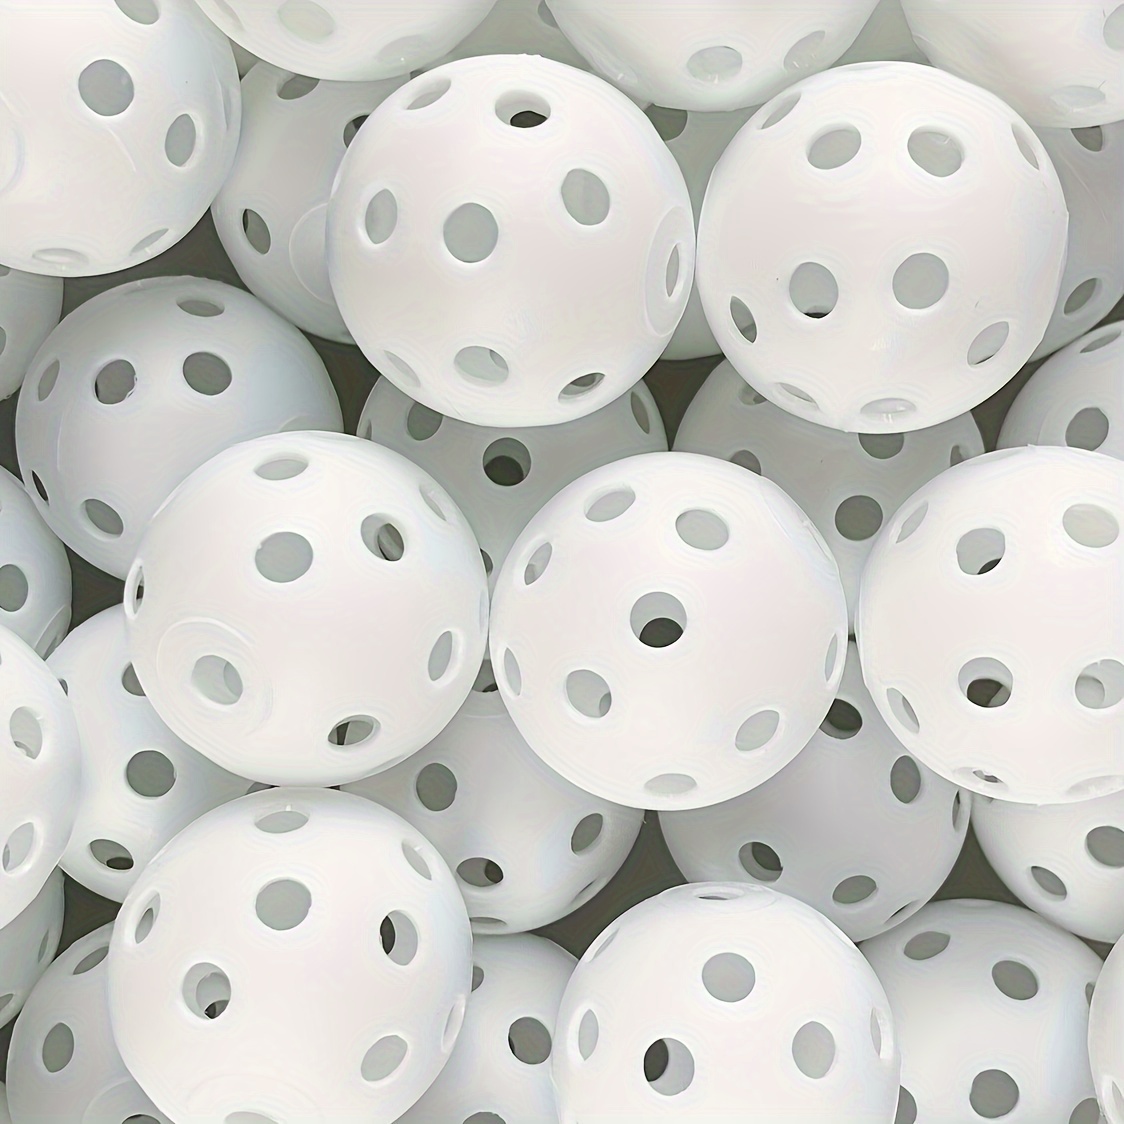 

50pcs Plastic Golf Balls, Floor Balls Airflow/hollow Practice Ball, White